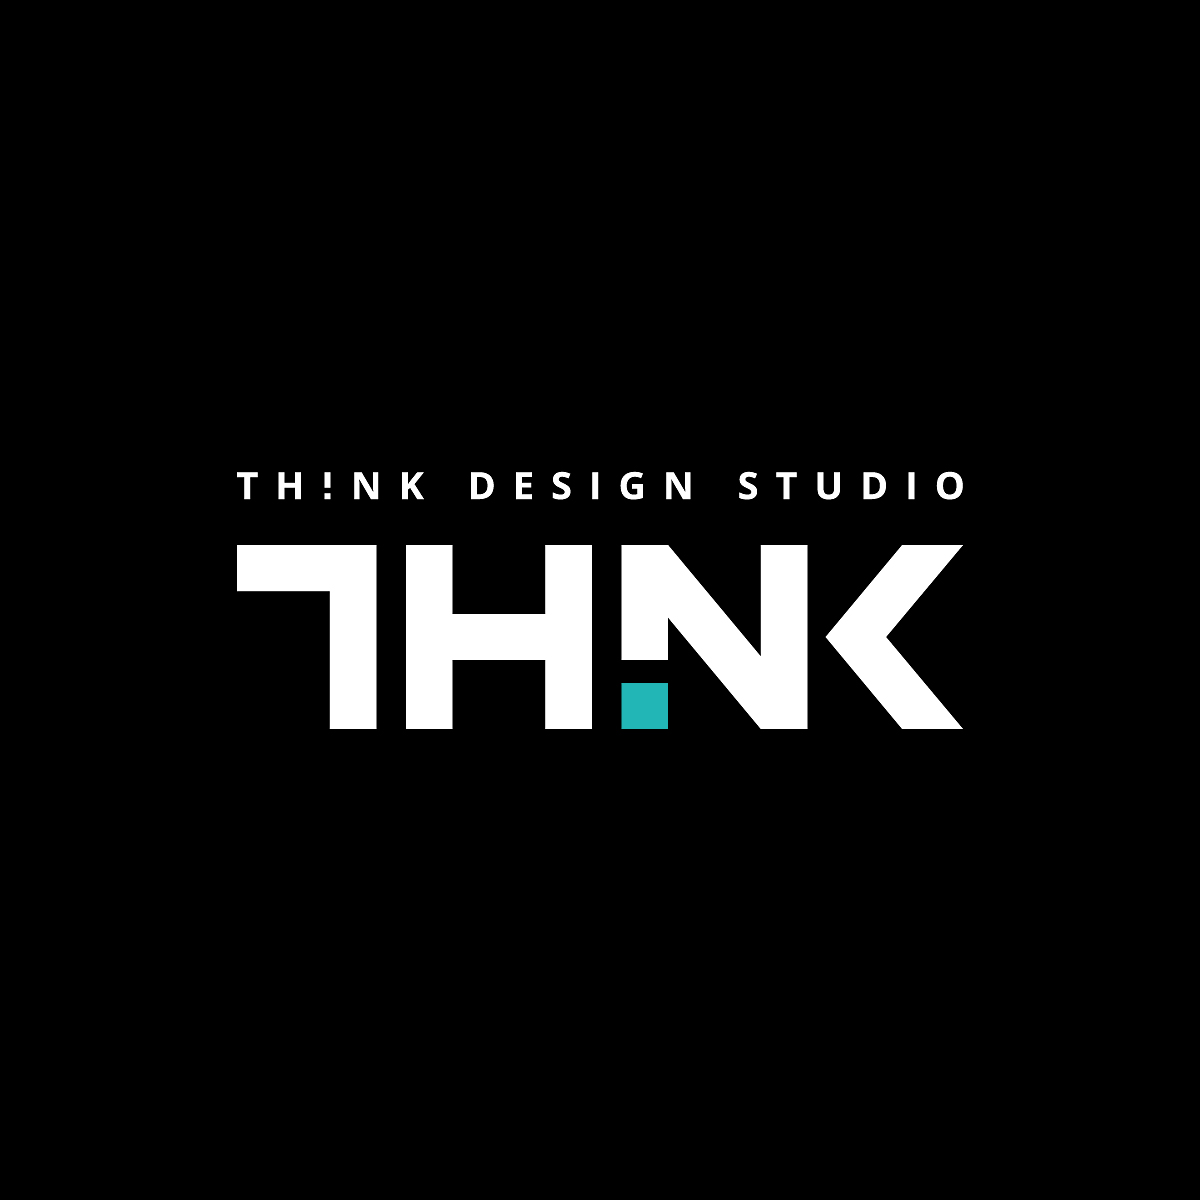 TH!NK design studio